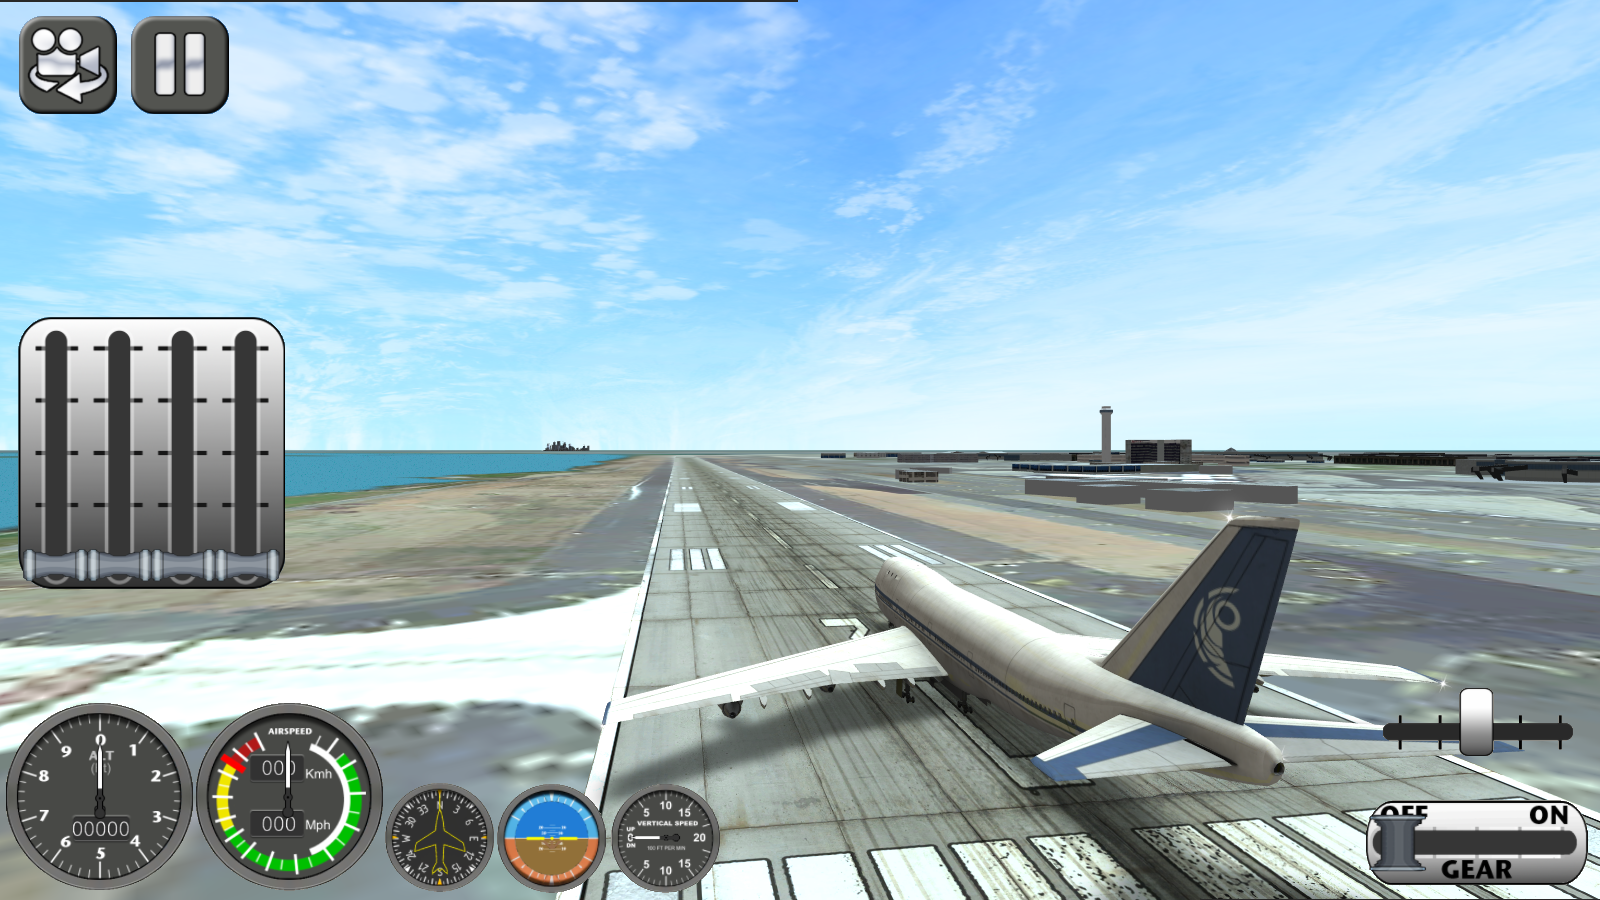 Игра симулятор 9. Игра Боинг симулятор. Летать на самолете игра. Реалистичная игра про самолеты. Симулятор полёта на самолёте.